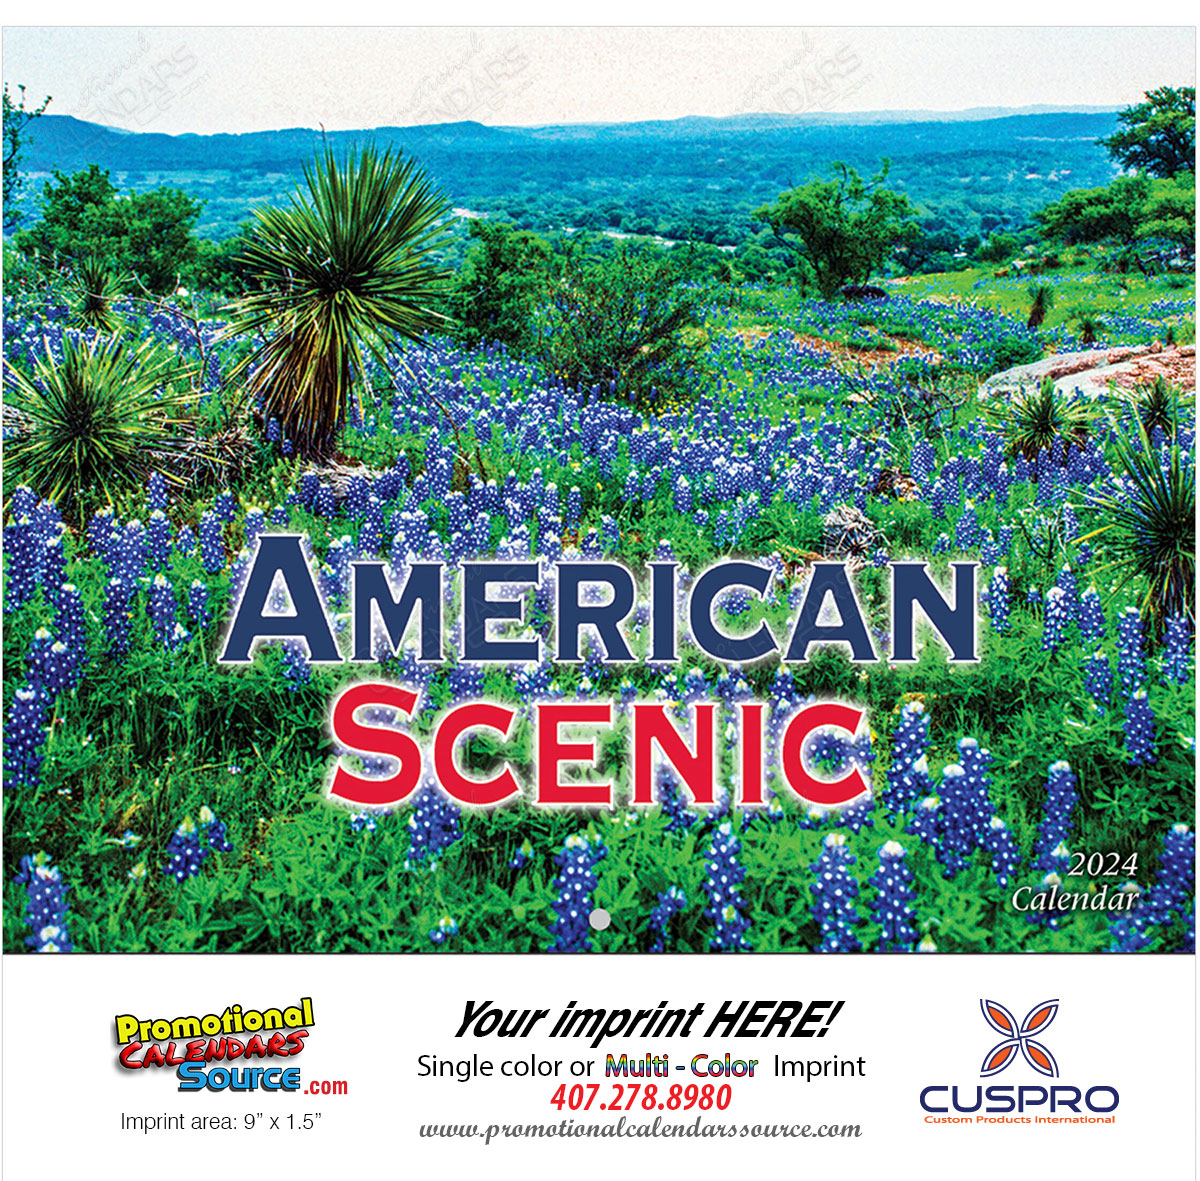 American Scenic Promotional Calendar  - Stapled